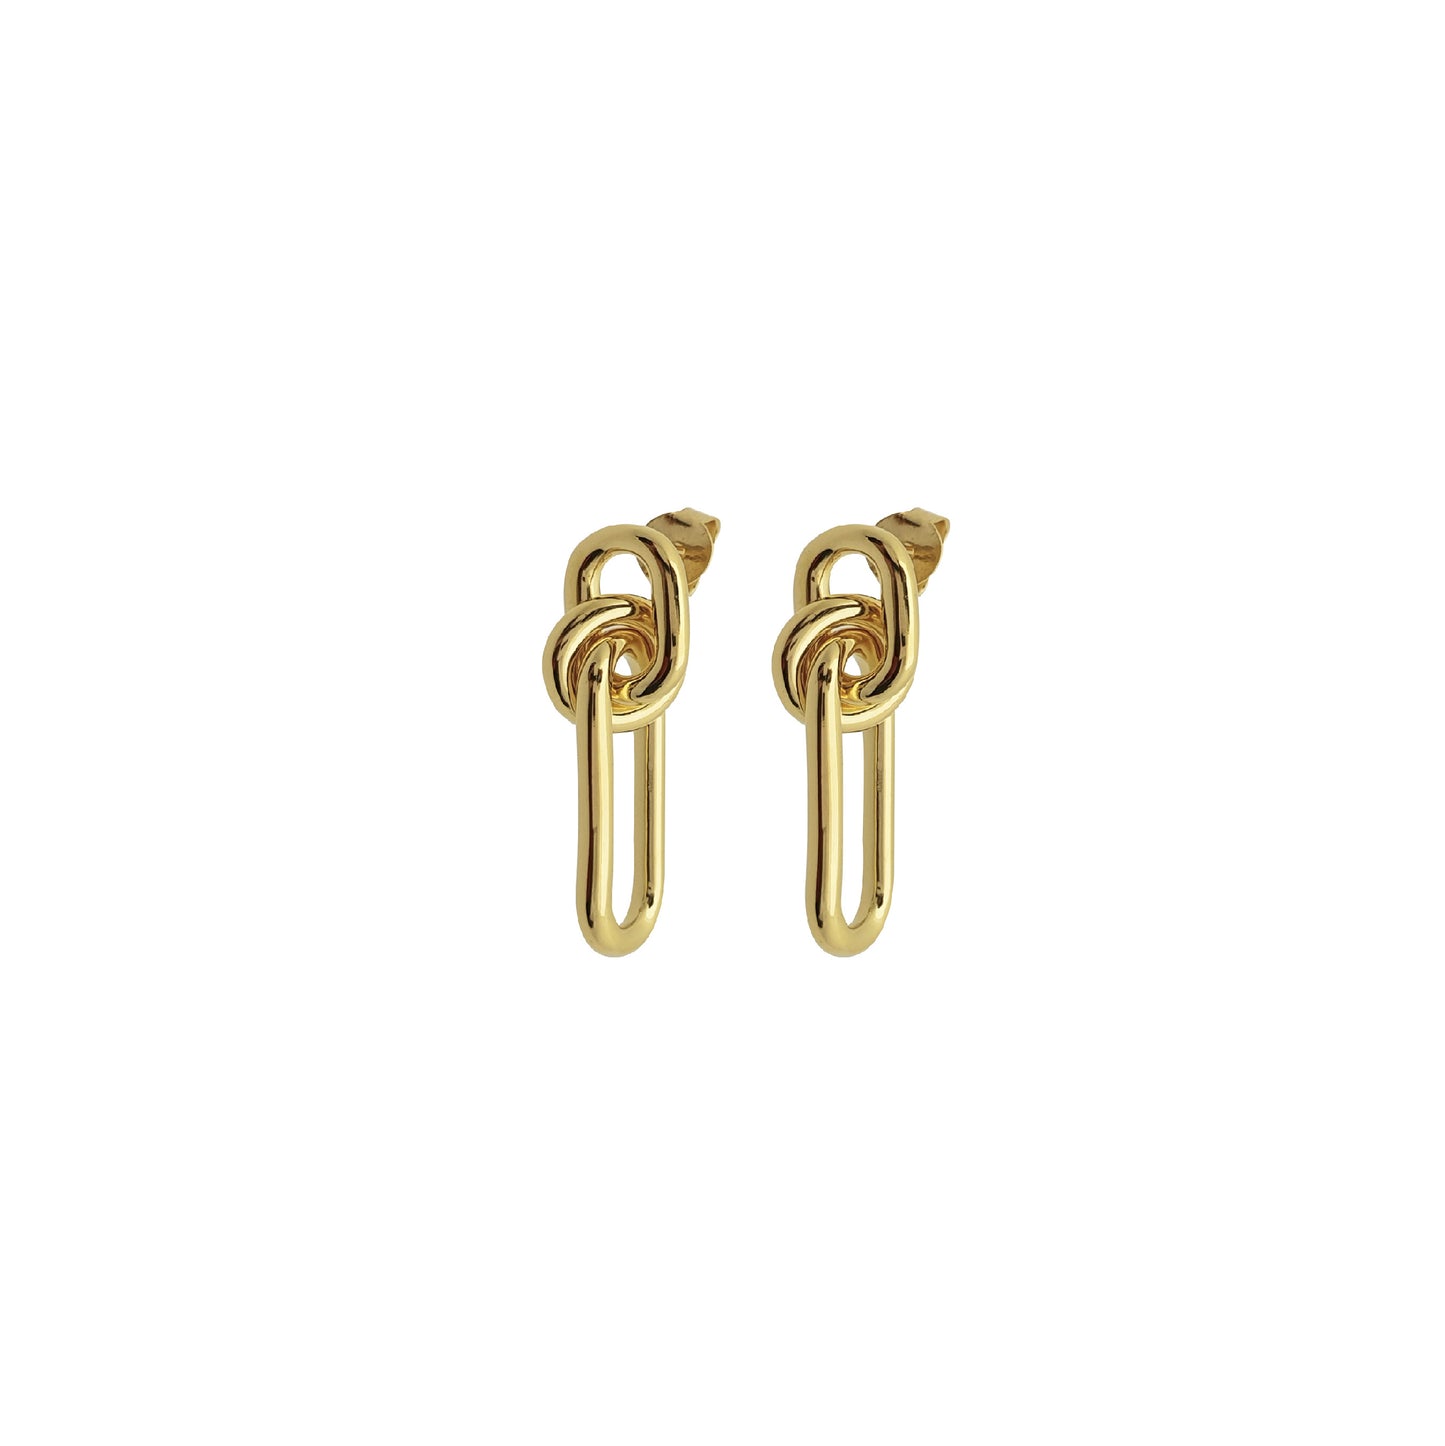 Ineinander verschlungene Ohrringe aus 18 Karat vergoldetem Sterlingsilber